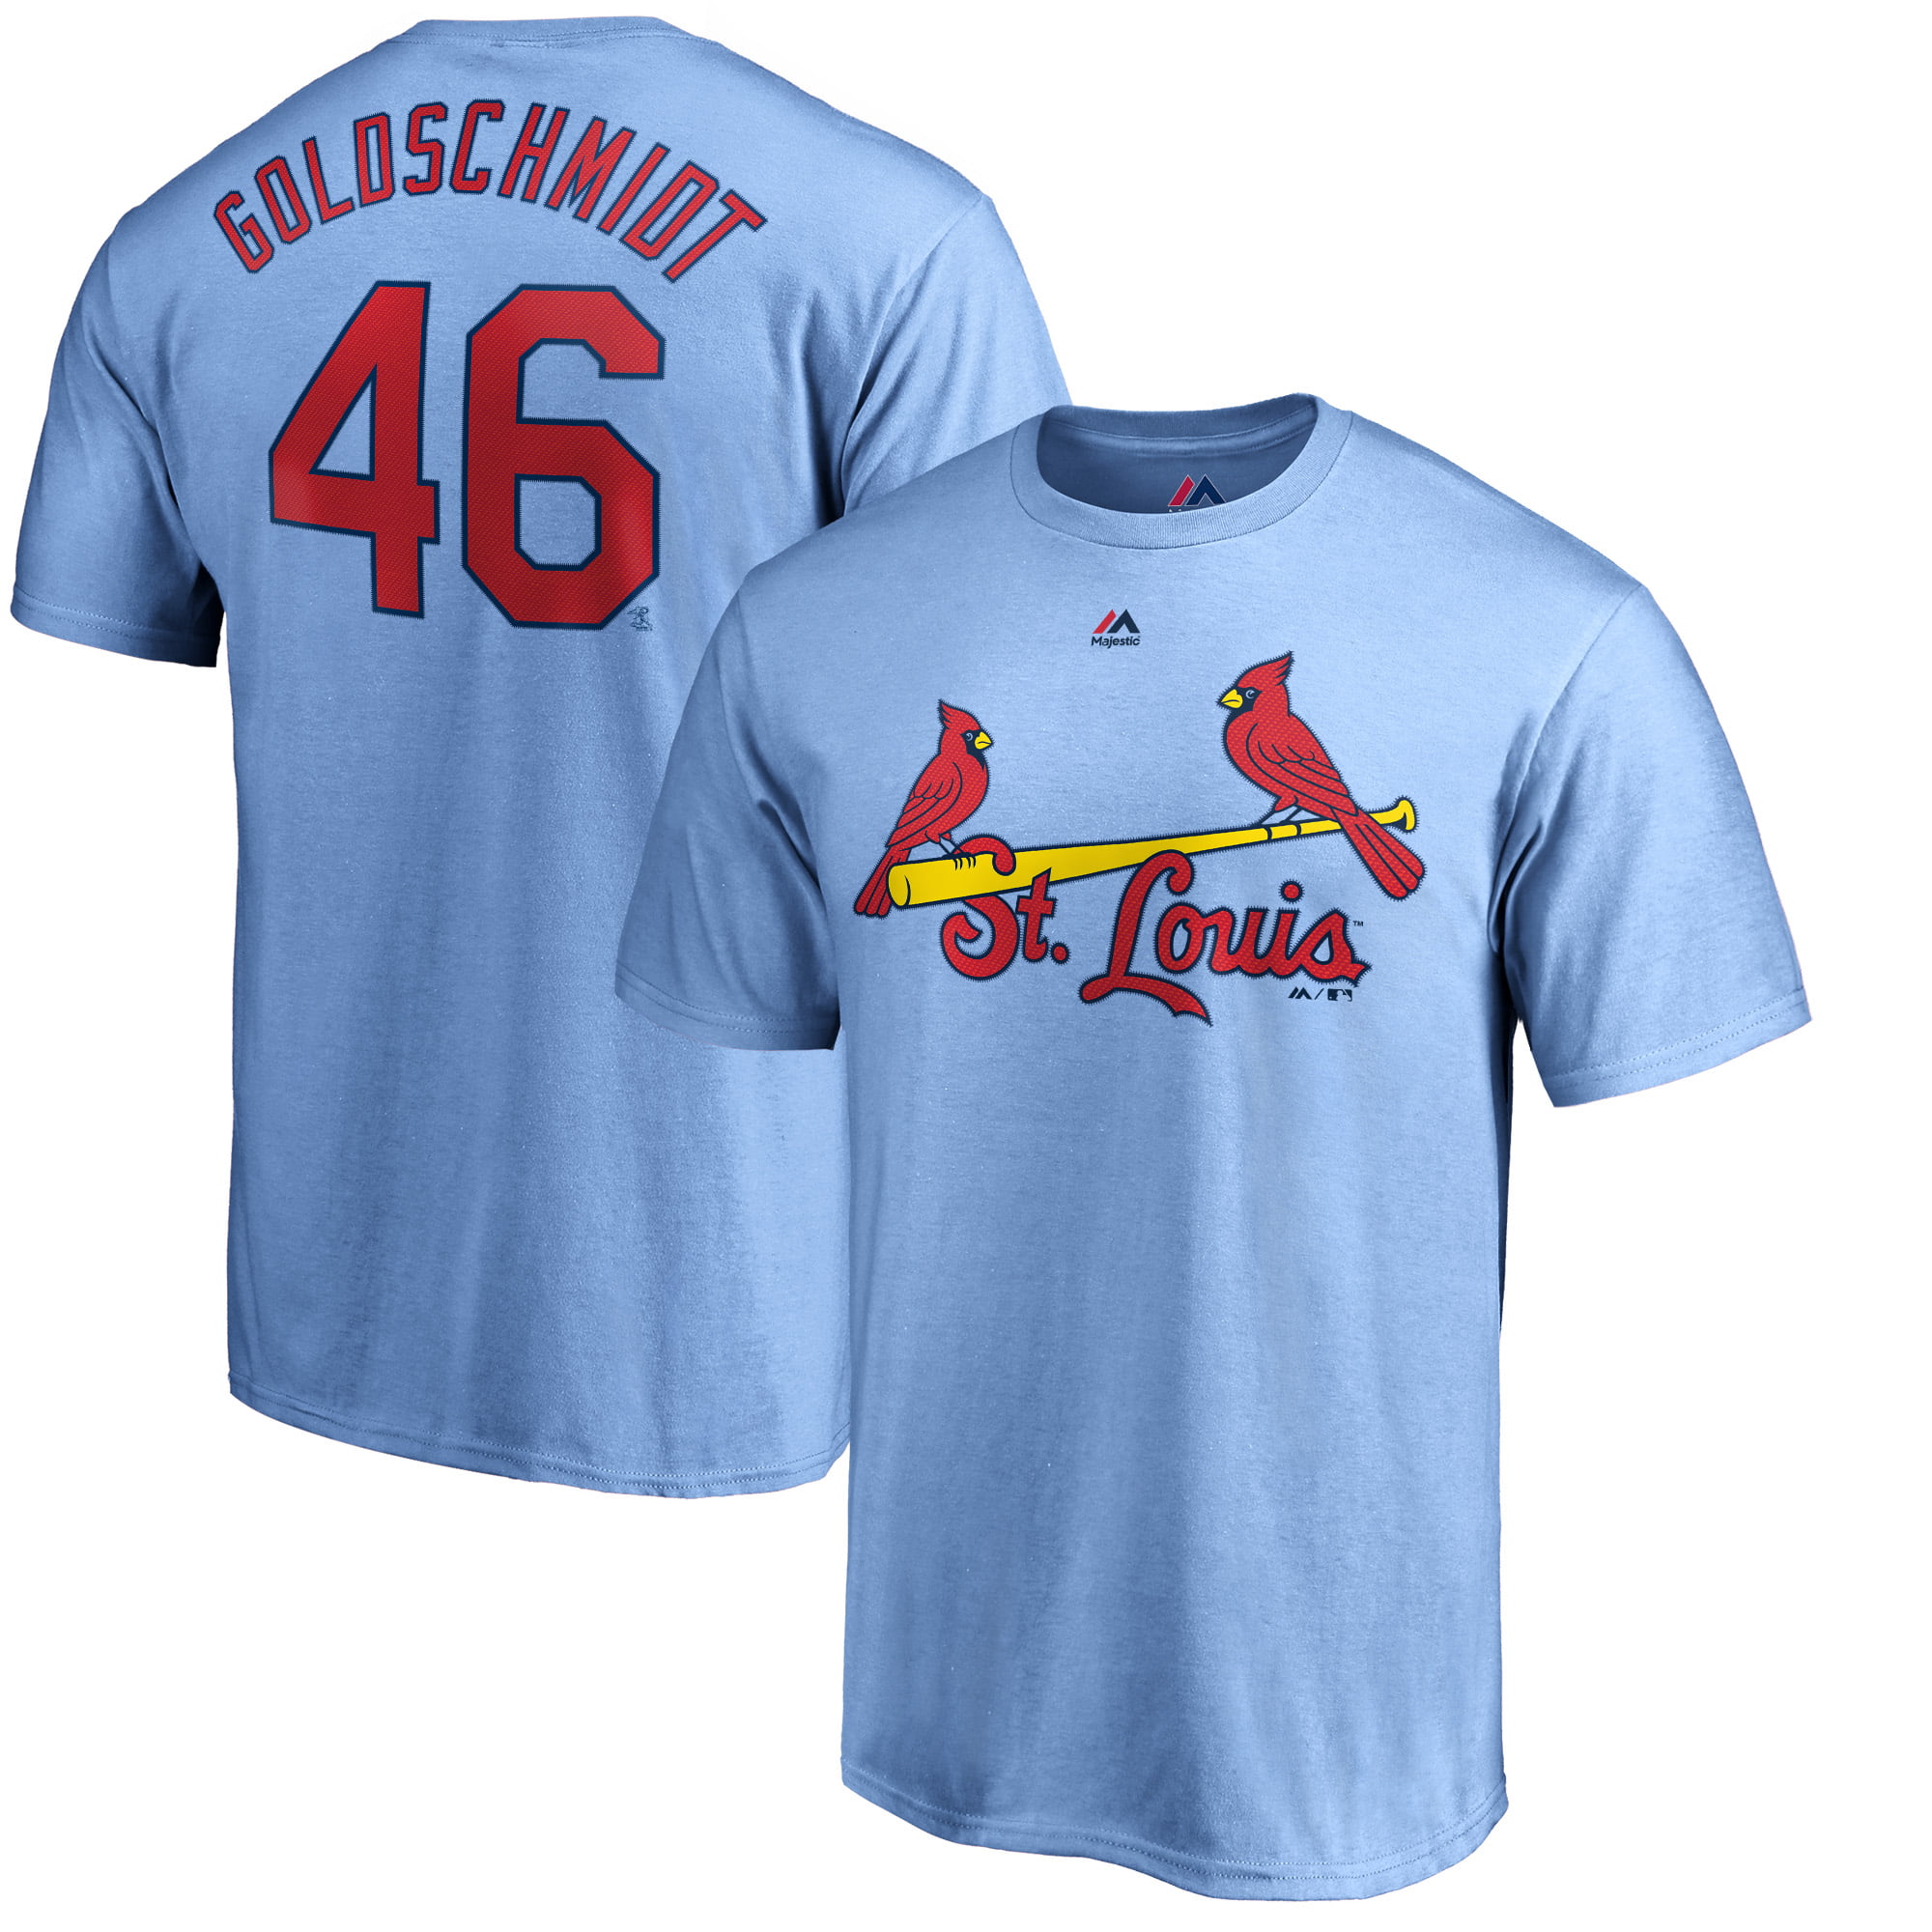 Paul Goldschmidt St. Louis Cardinals Majestic Official Name & Number T-Shirt - Light Blue ...